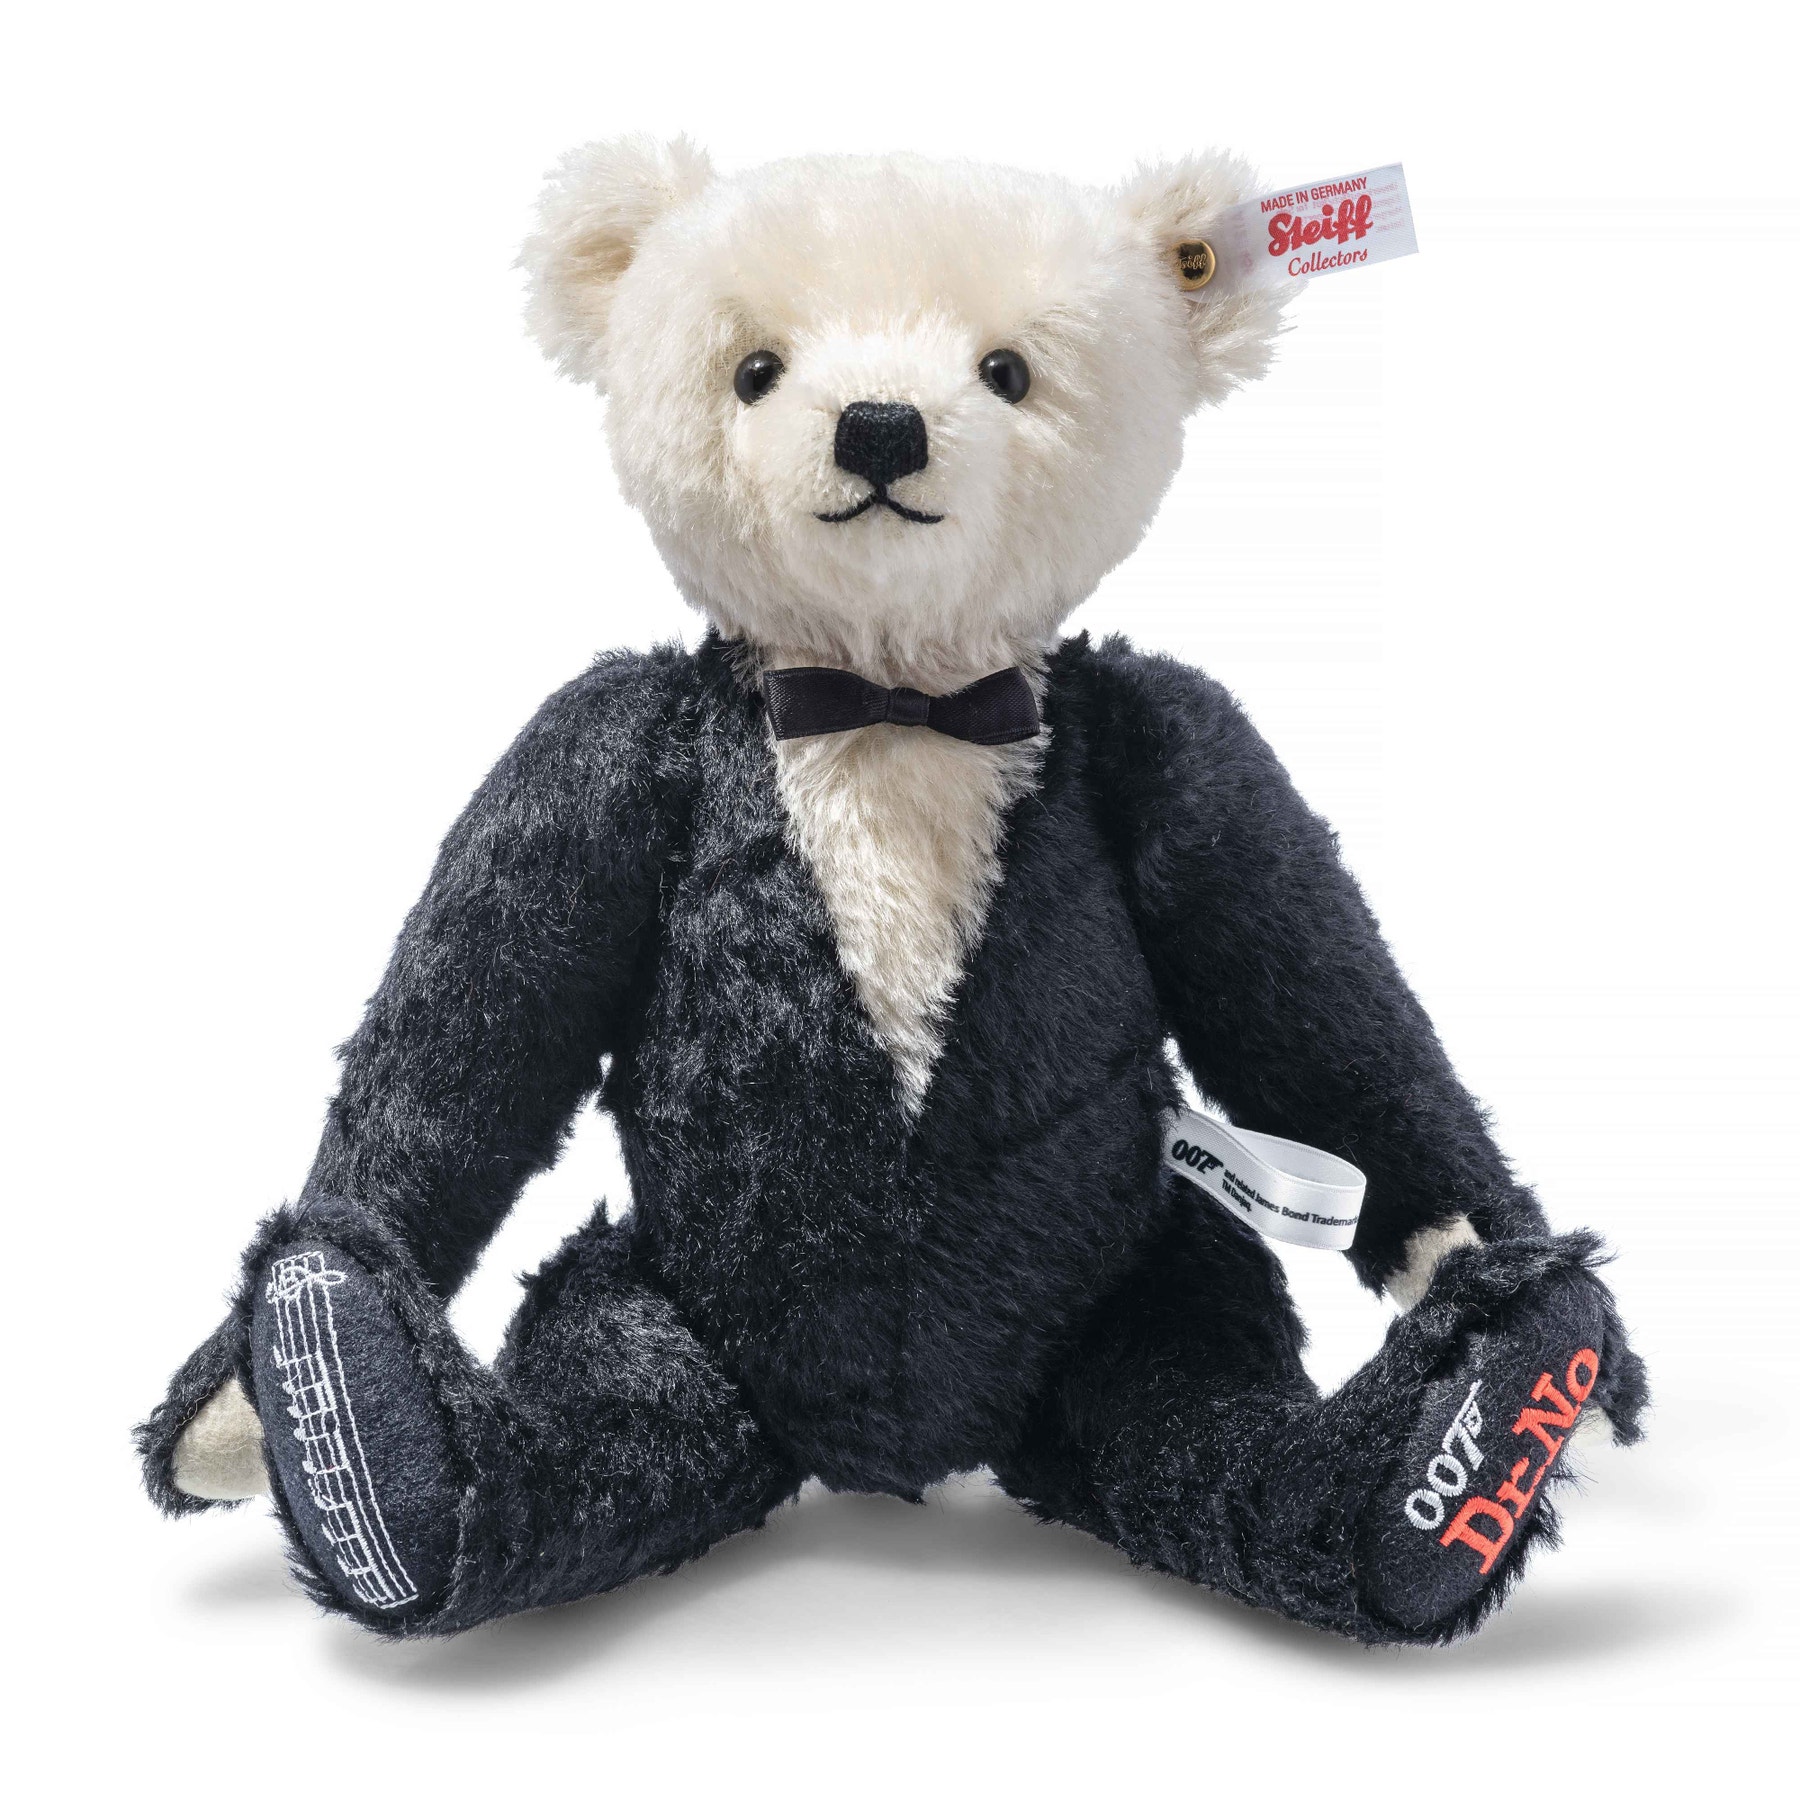 James Bond Dr. No musical Teddy bear